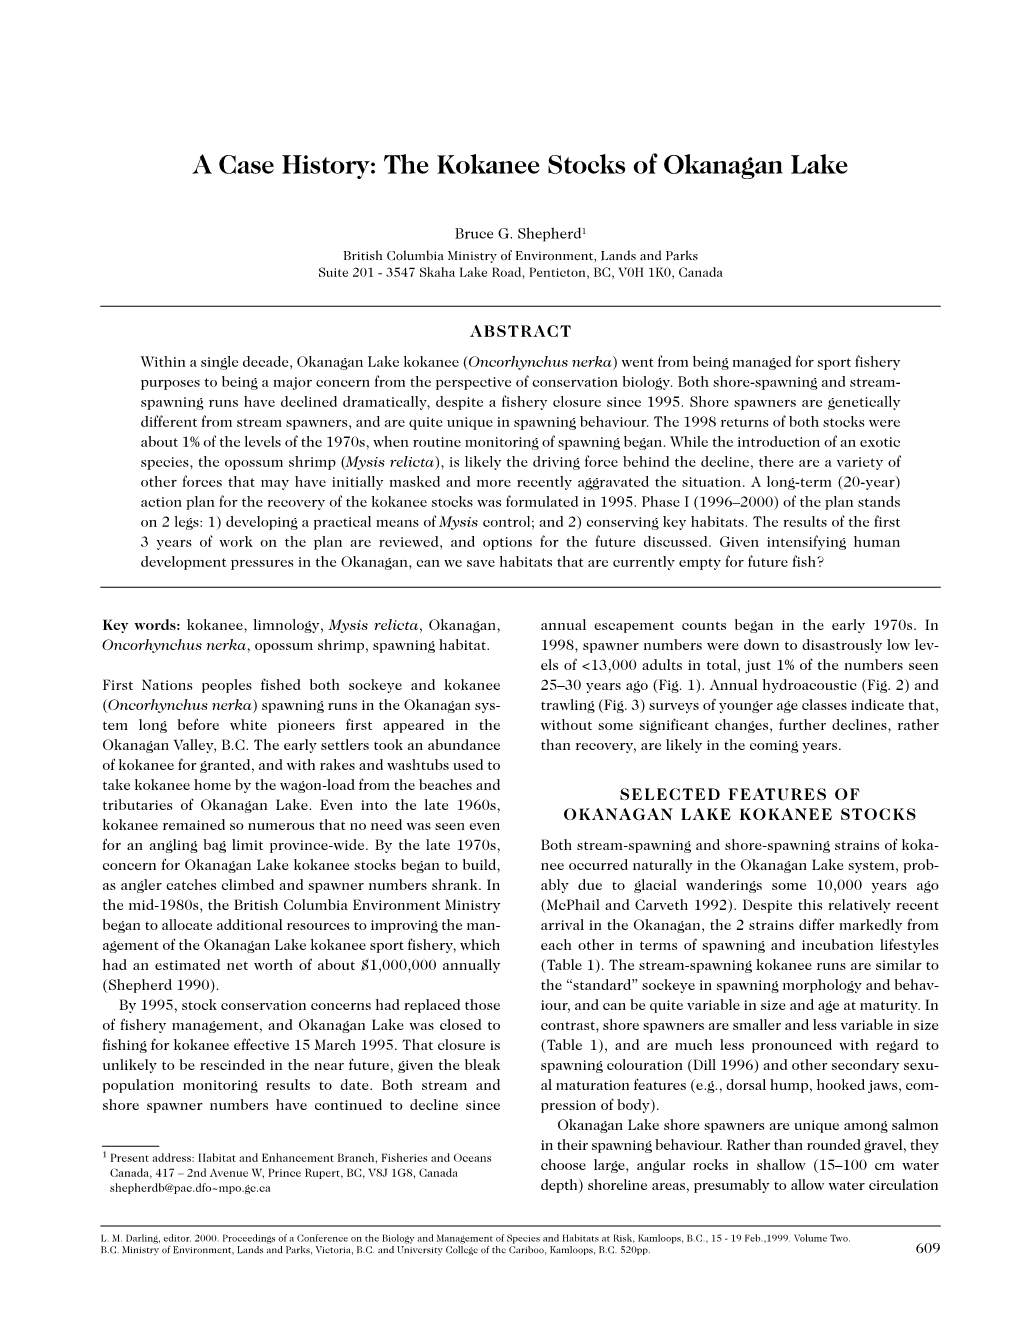 A Case History: the Kokanee Stocks of Okanagan Lake